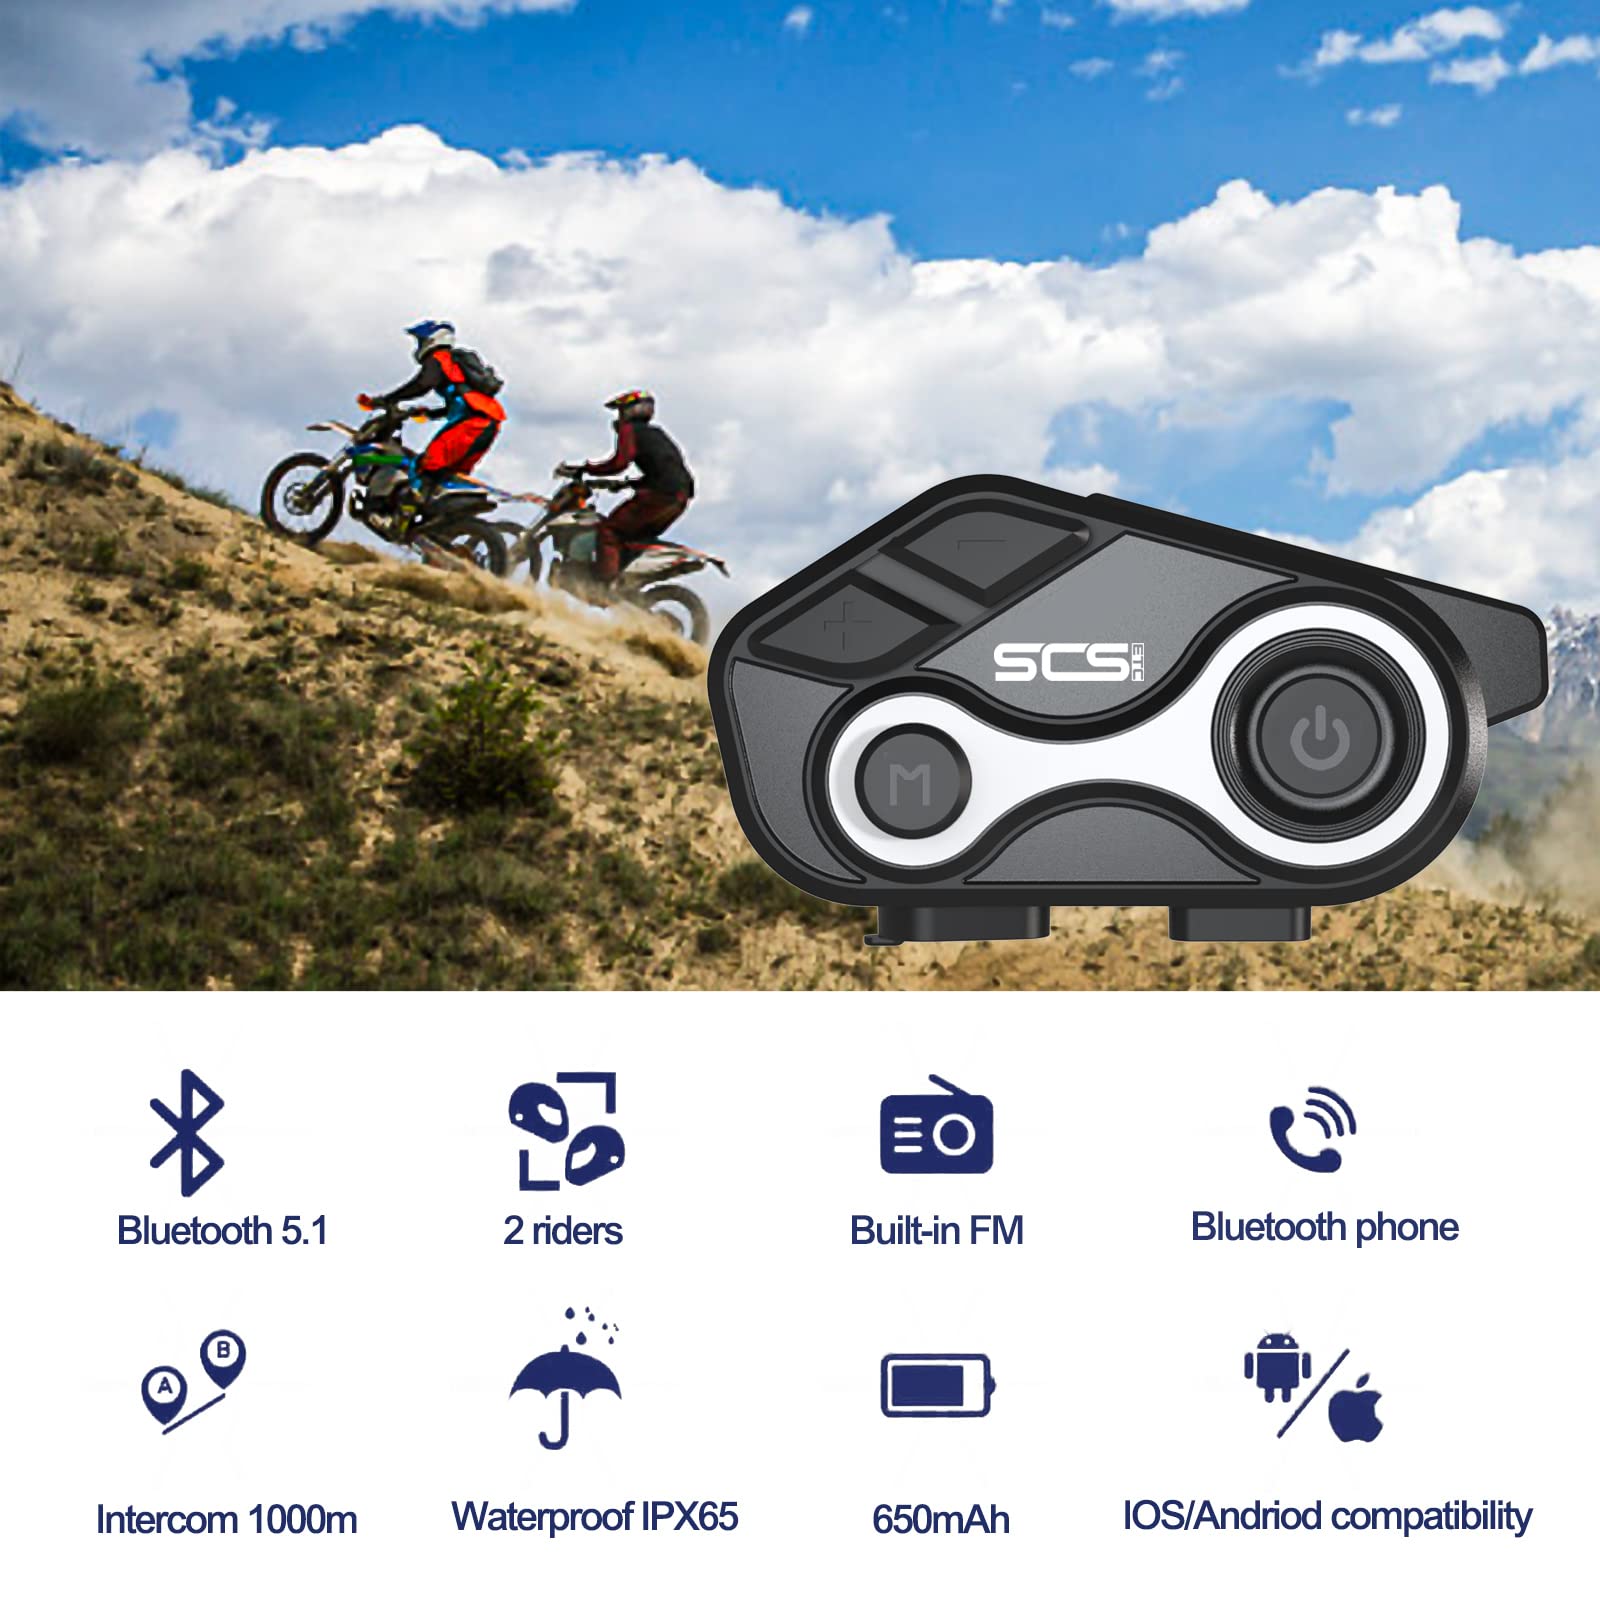 SCSETC Motorcycle Bluetooth Intercom S-8X 1000m 2 Riders Motorbike Helmet Communication System Headset Universal Wireless Interphone (Waterproof/Handsfree/Stereo Music/GPS/FM